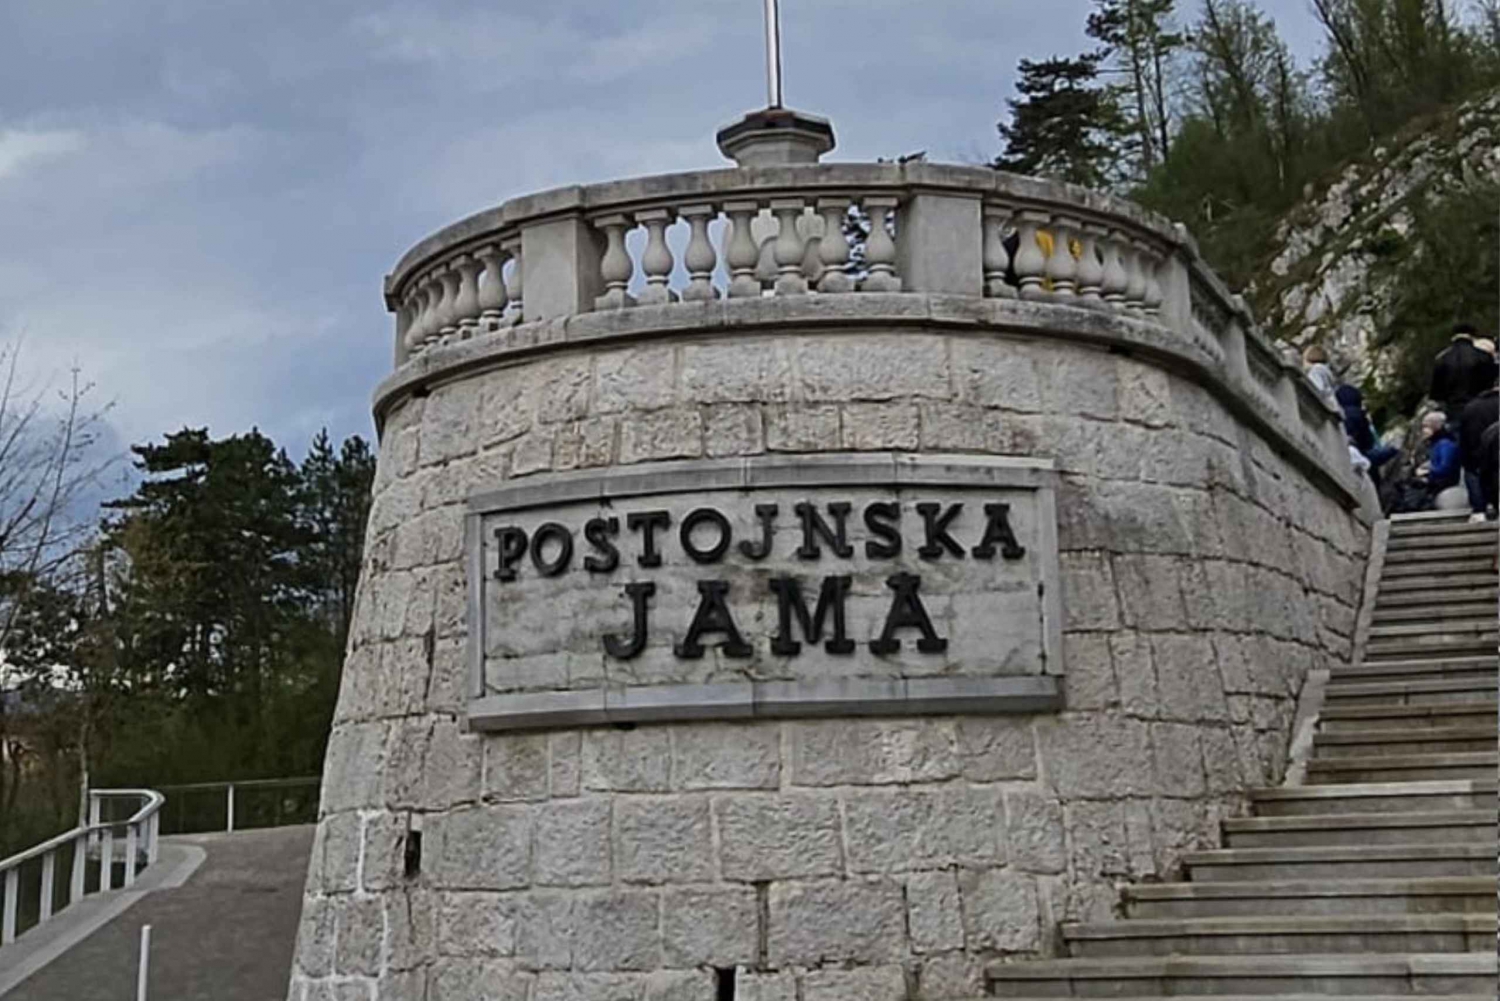 Ljubljana zur Höhle von Postojna, zur Burg Predjama und zum Park von Postojna